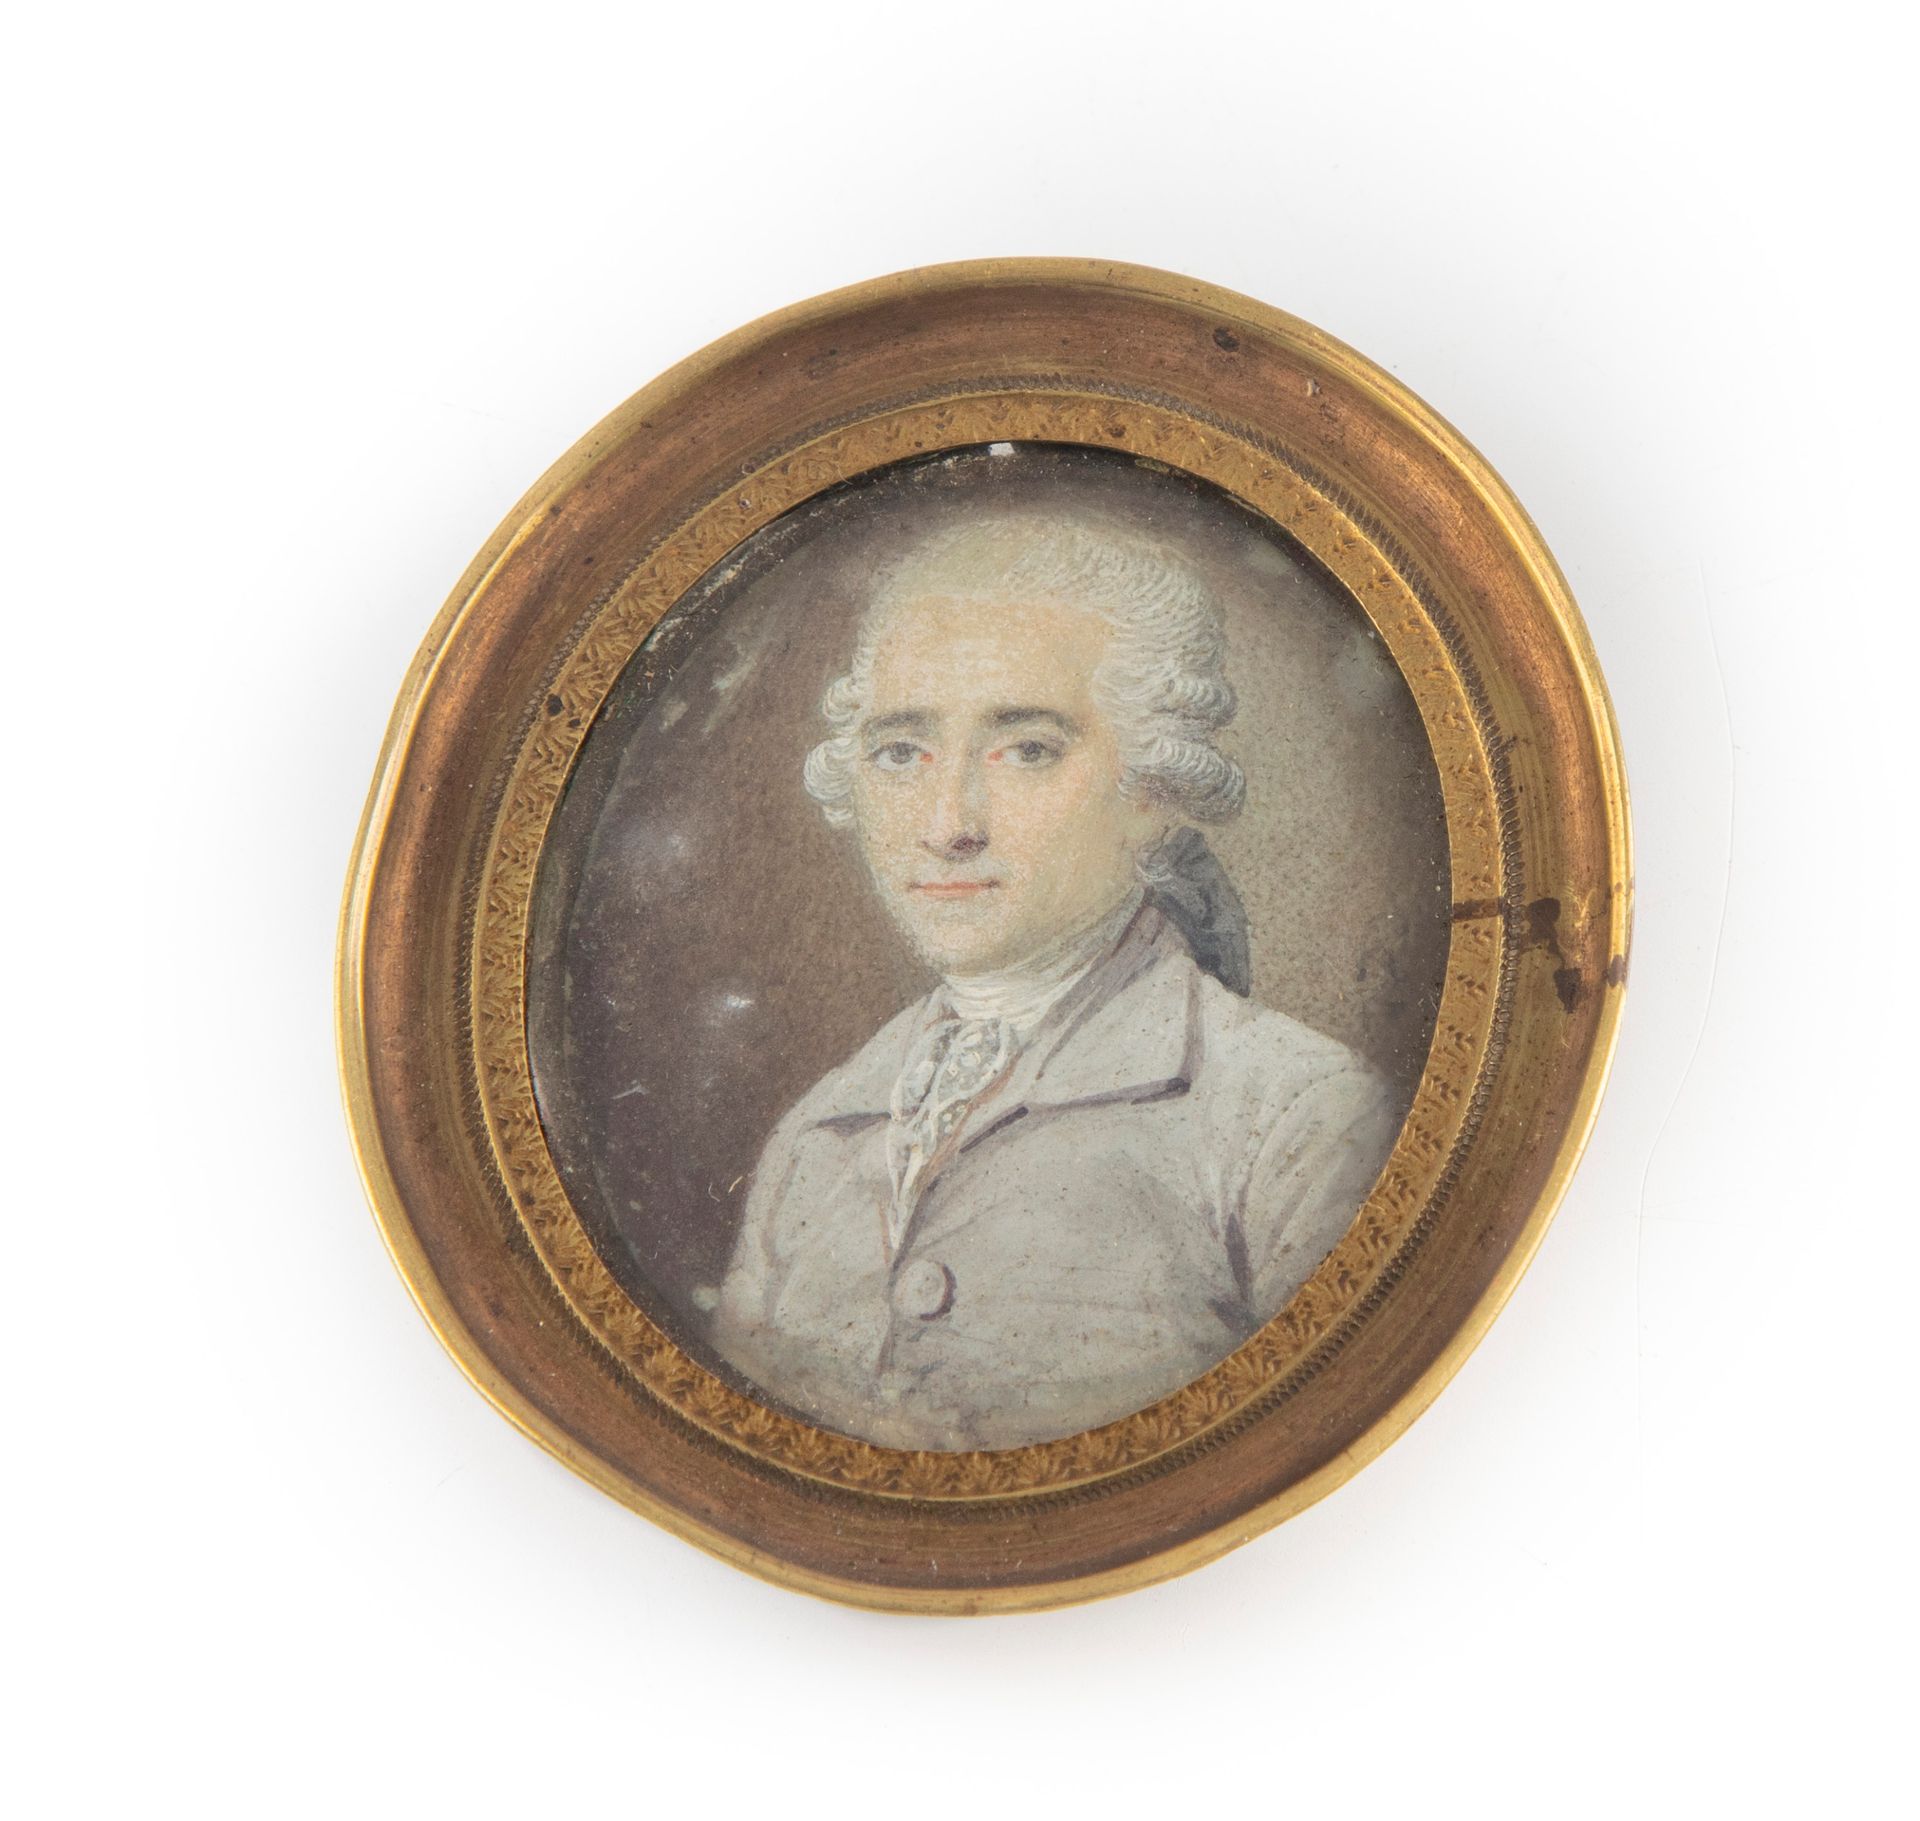 ECOLE FRANCAISE XVIIIè FRANZÖSISCHE SCHULE 18. Jahrhundert

Miniatur, Porträt ei&hellip;